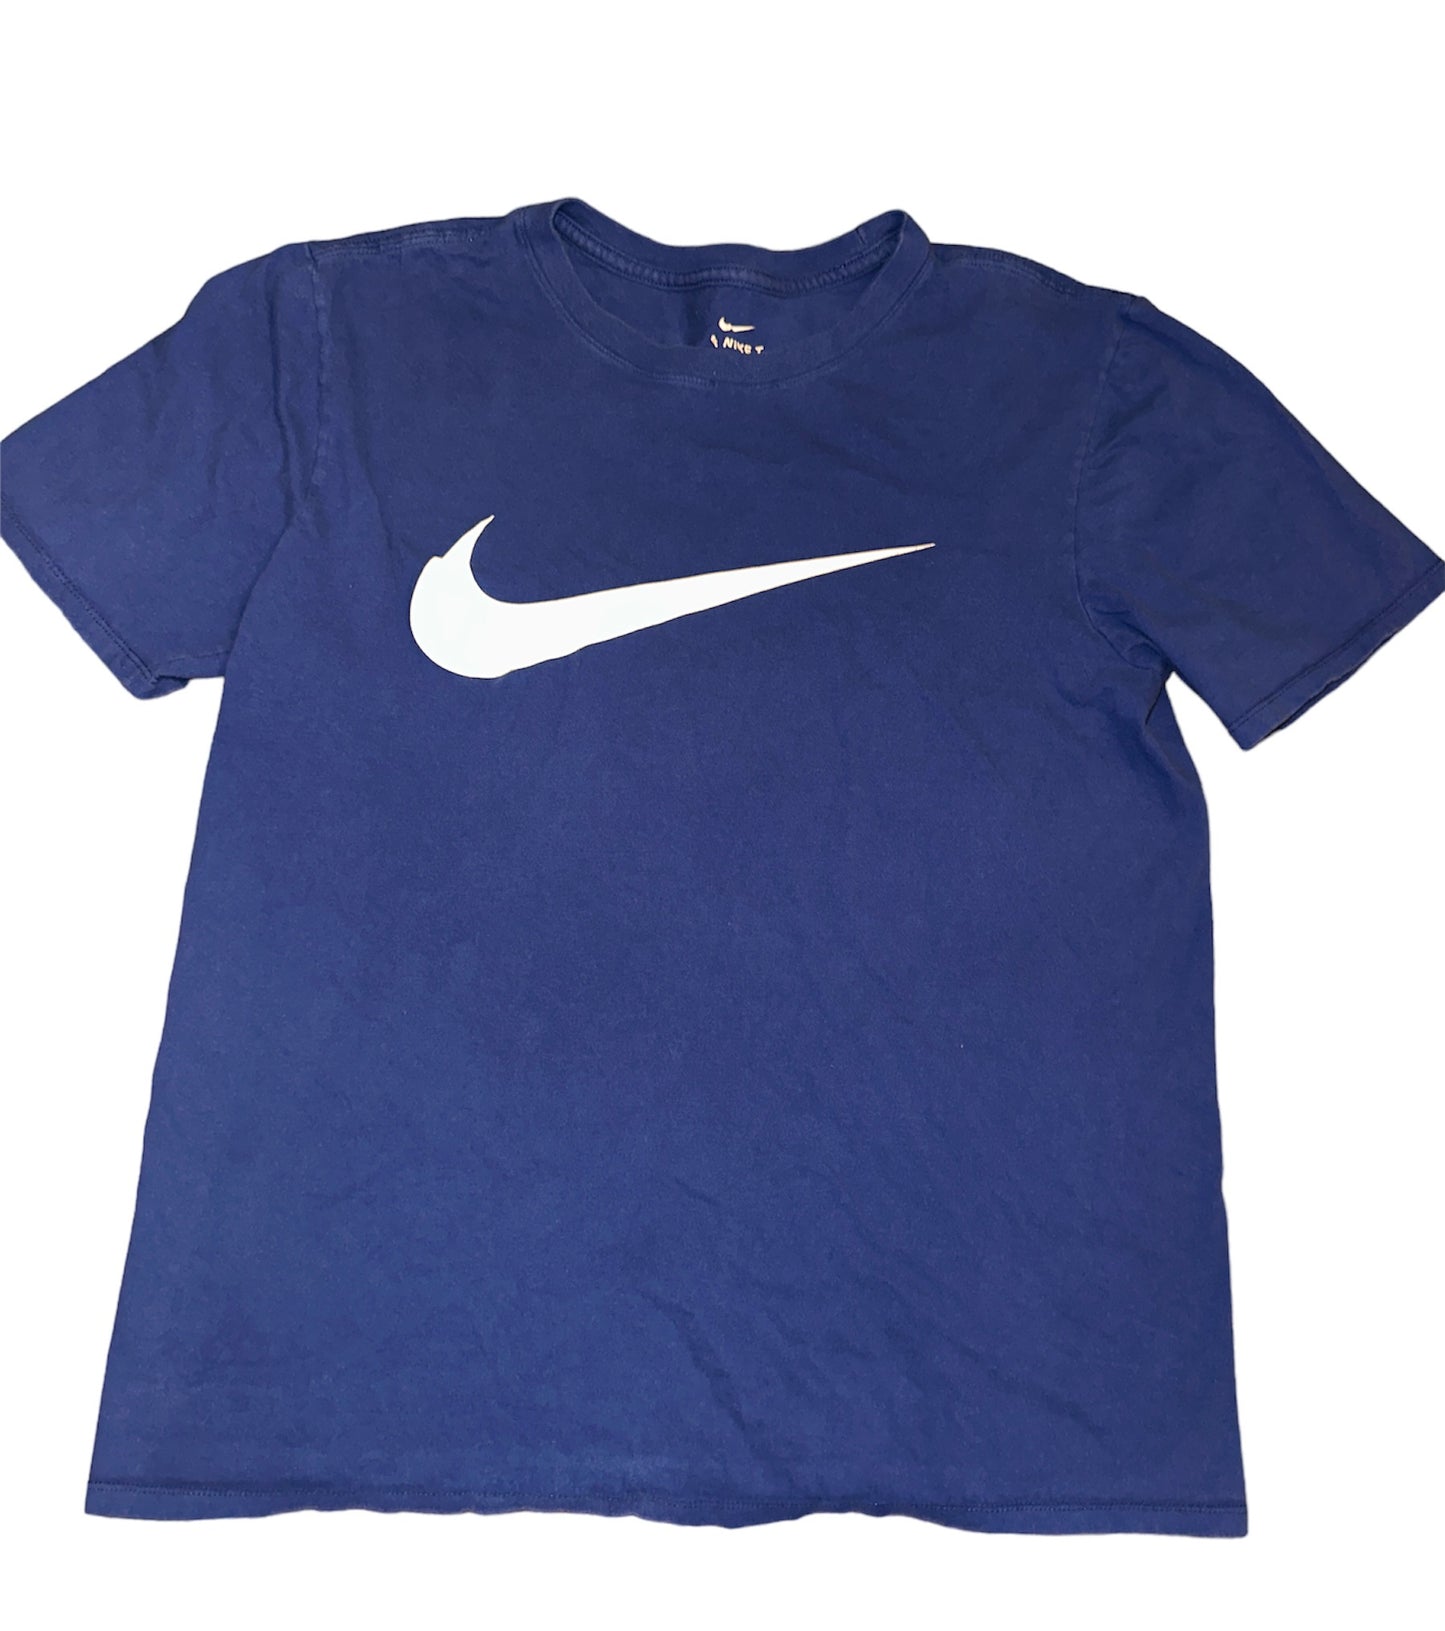 The Nike Tee - Royal Blue T-shirt